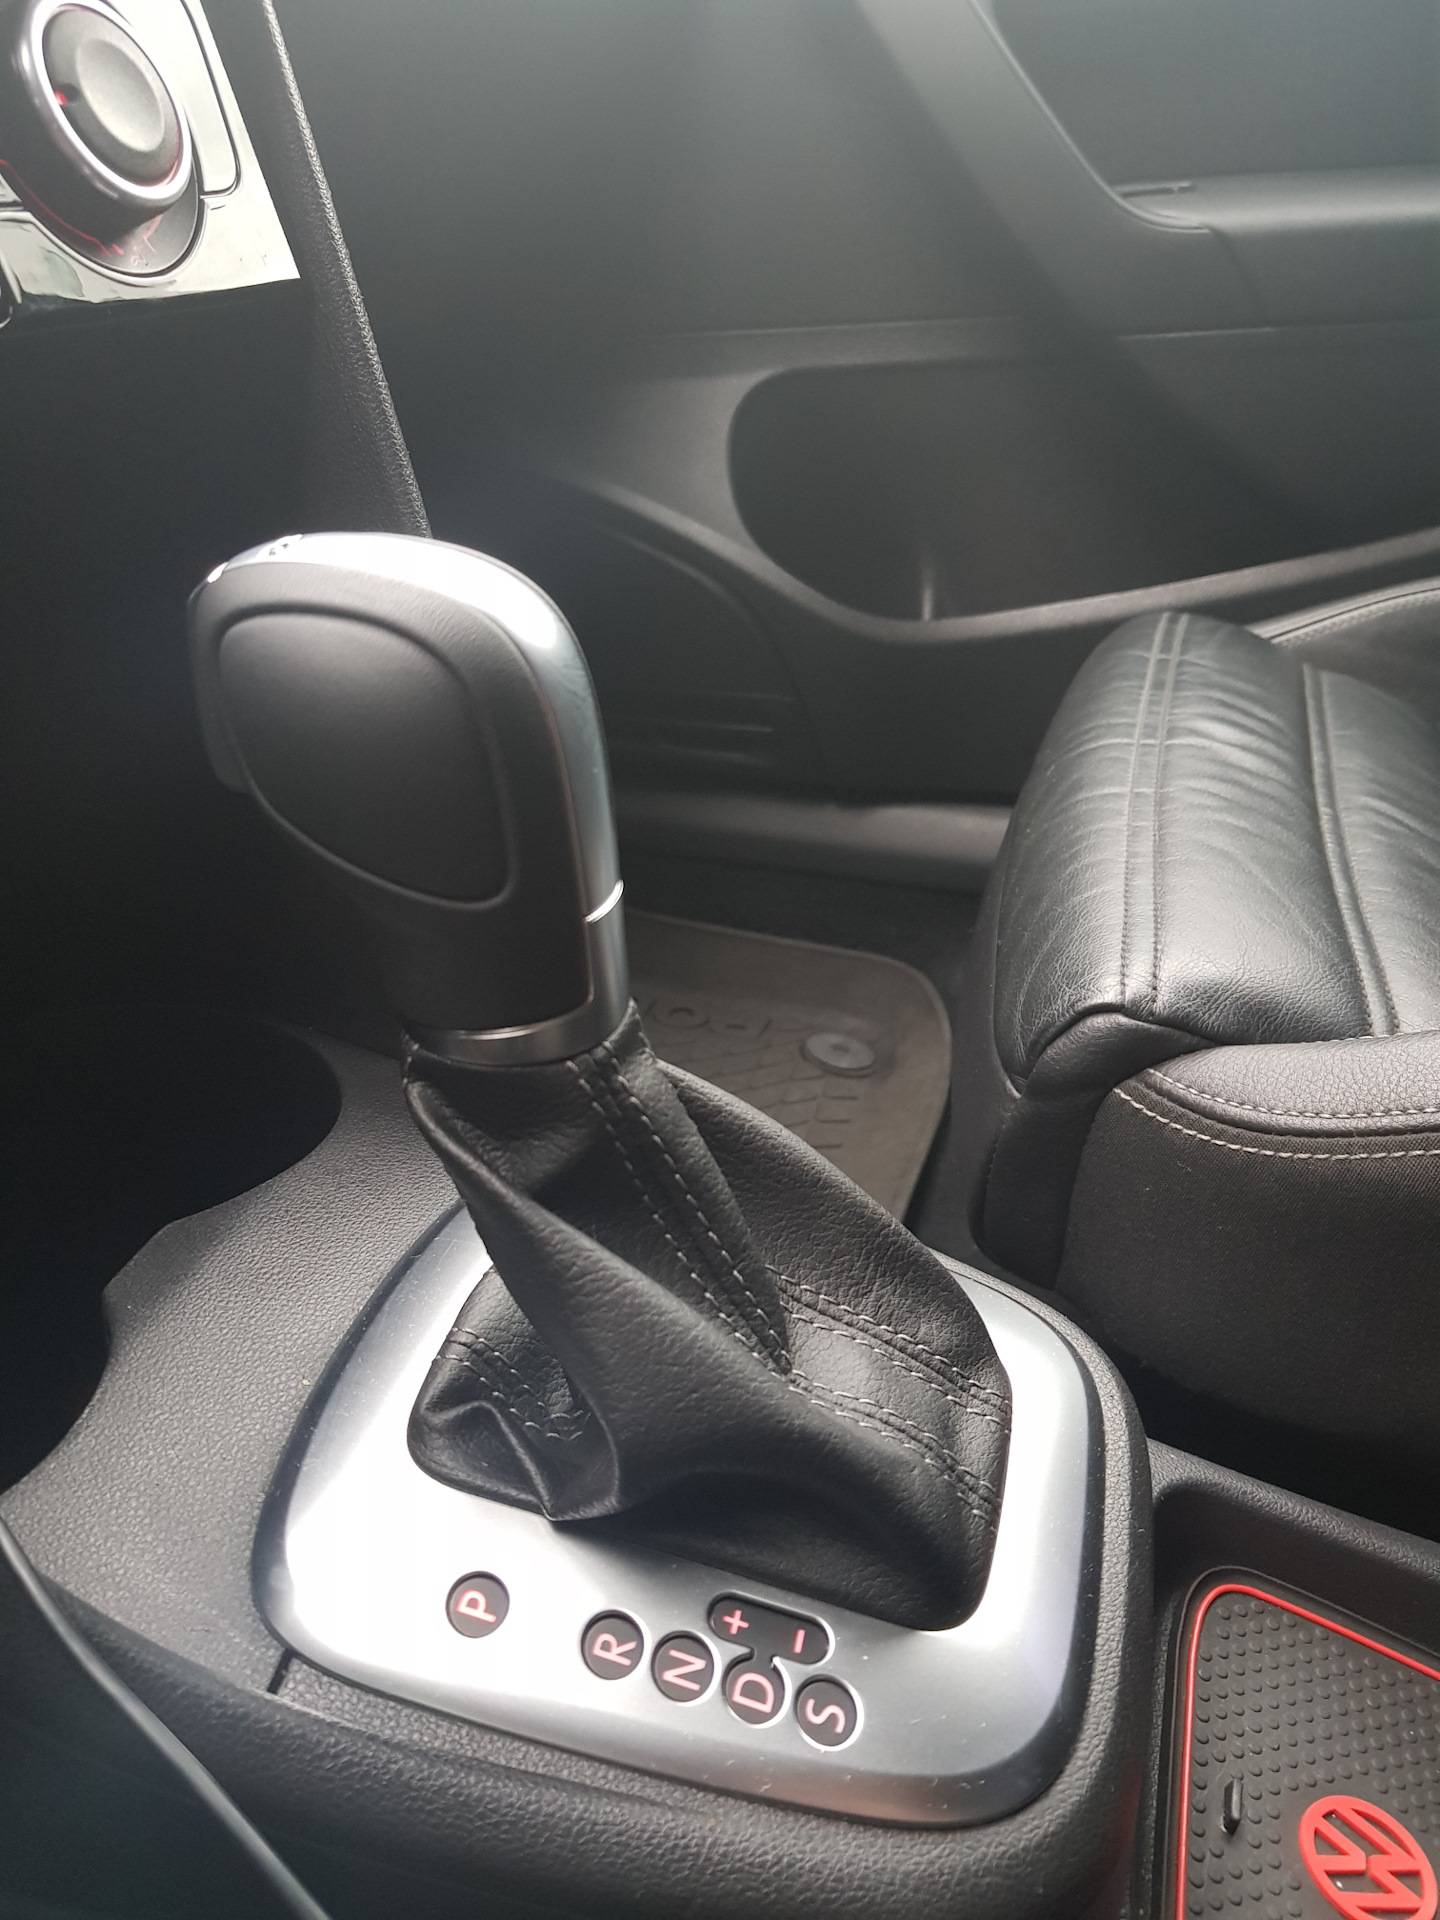 Поло седан с коробкой автомат: особенности АКПП Polo Sedan